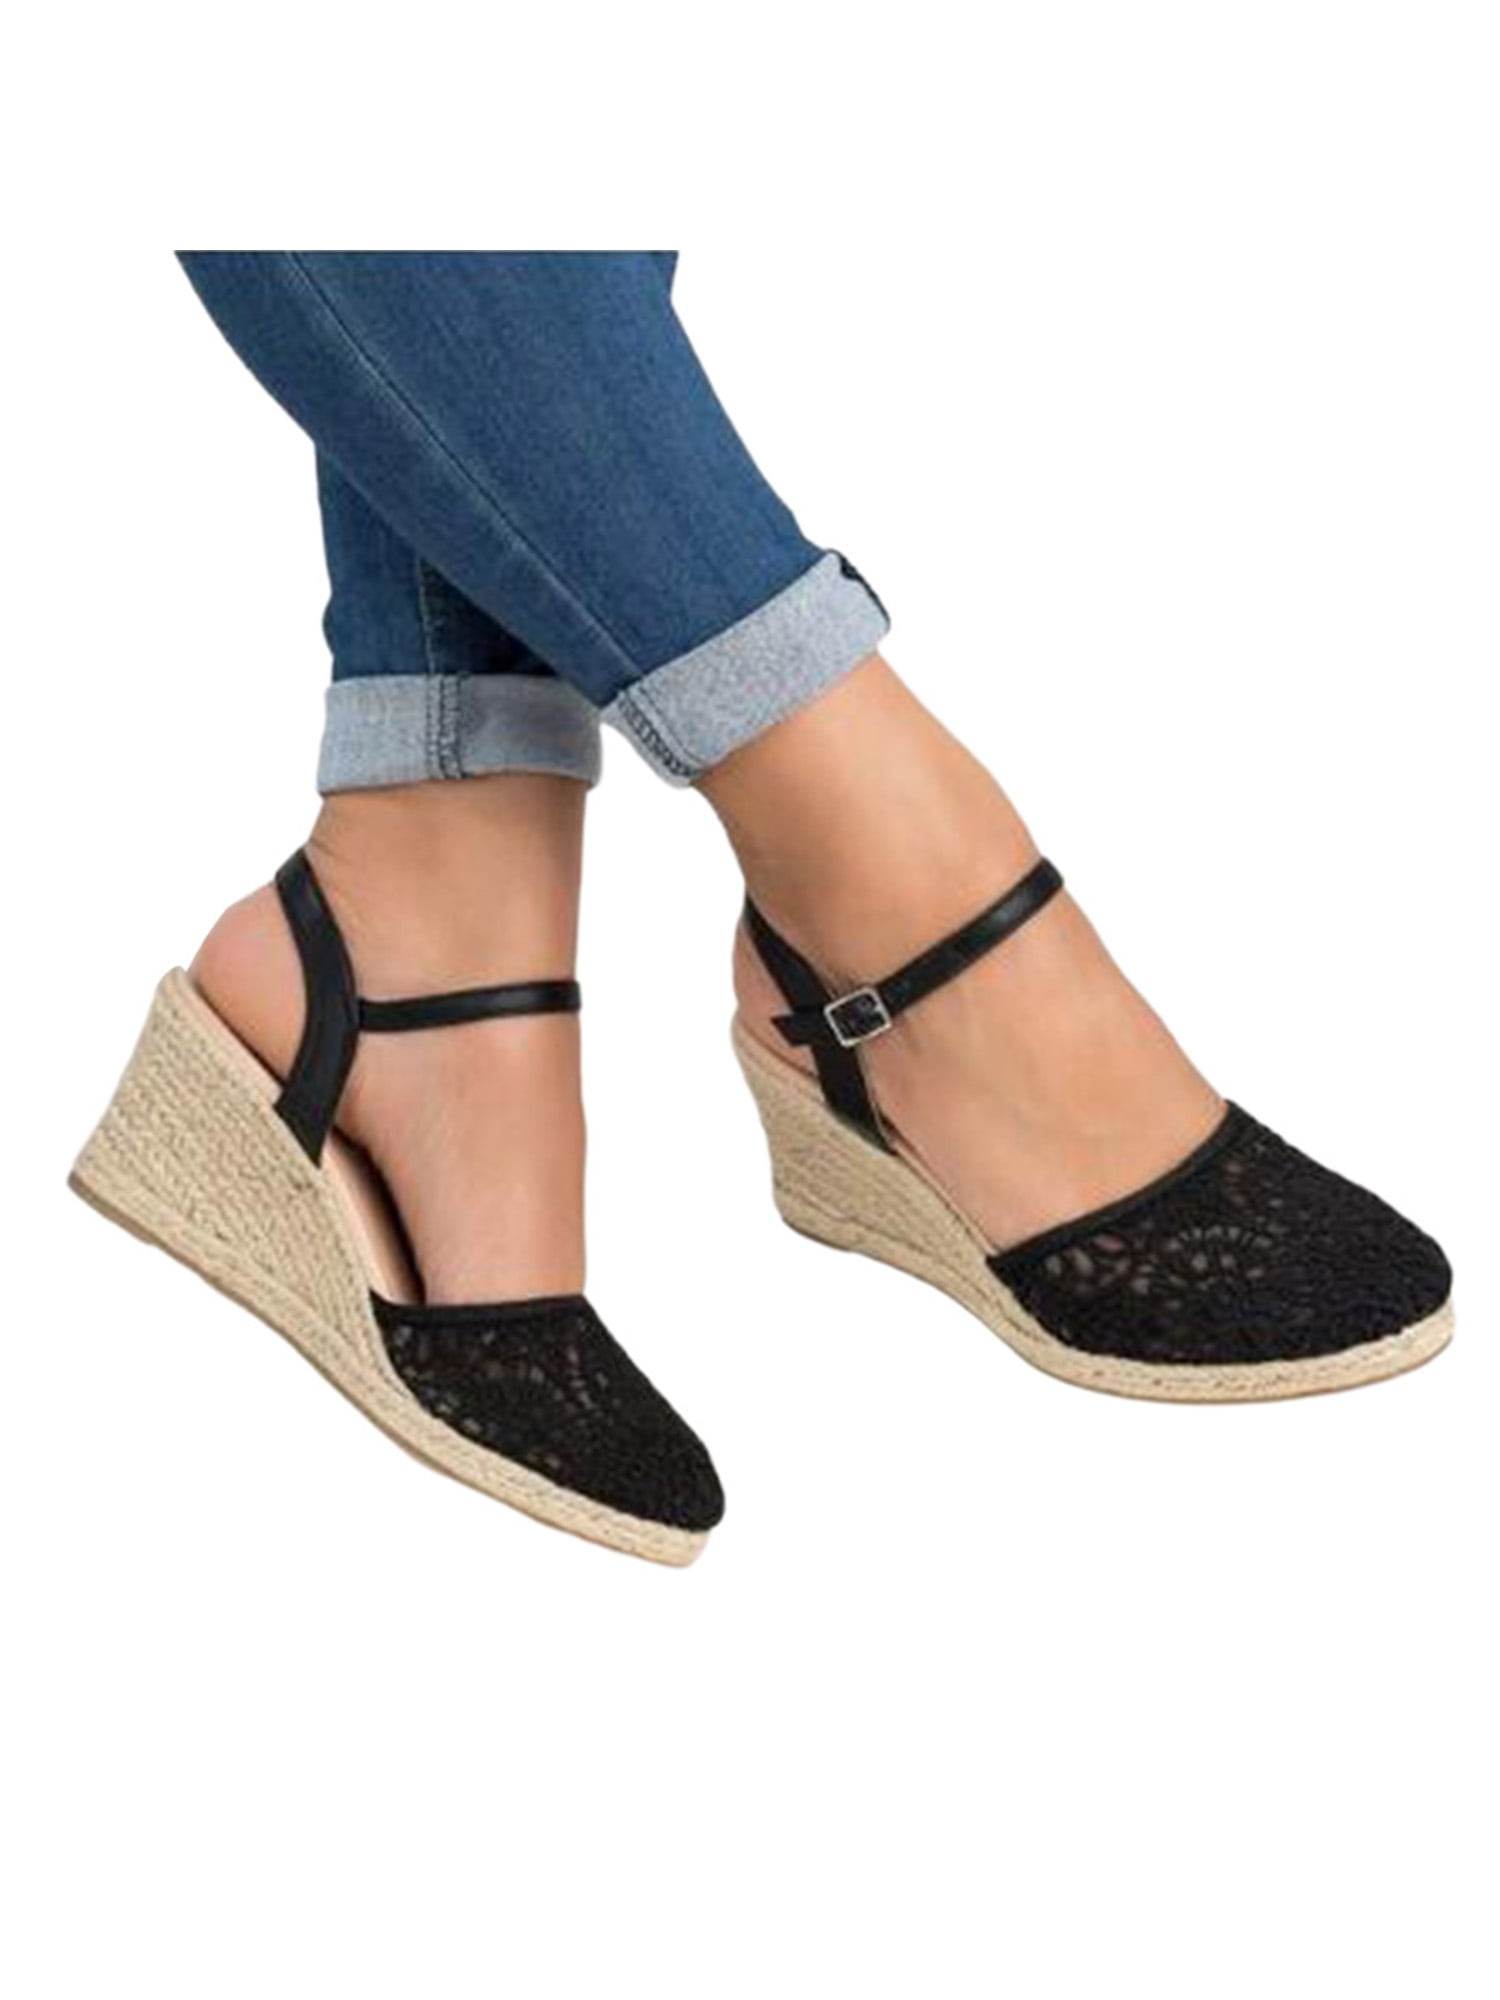 New Women Tassel Platform Sandals Lightweight Closed Toe Espadrilles Wedge Shoes